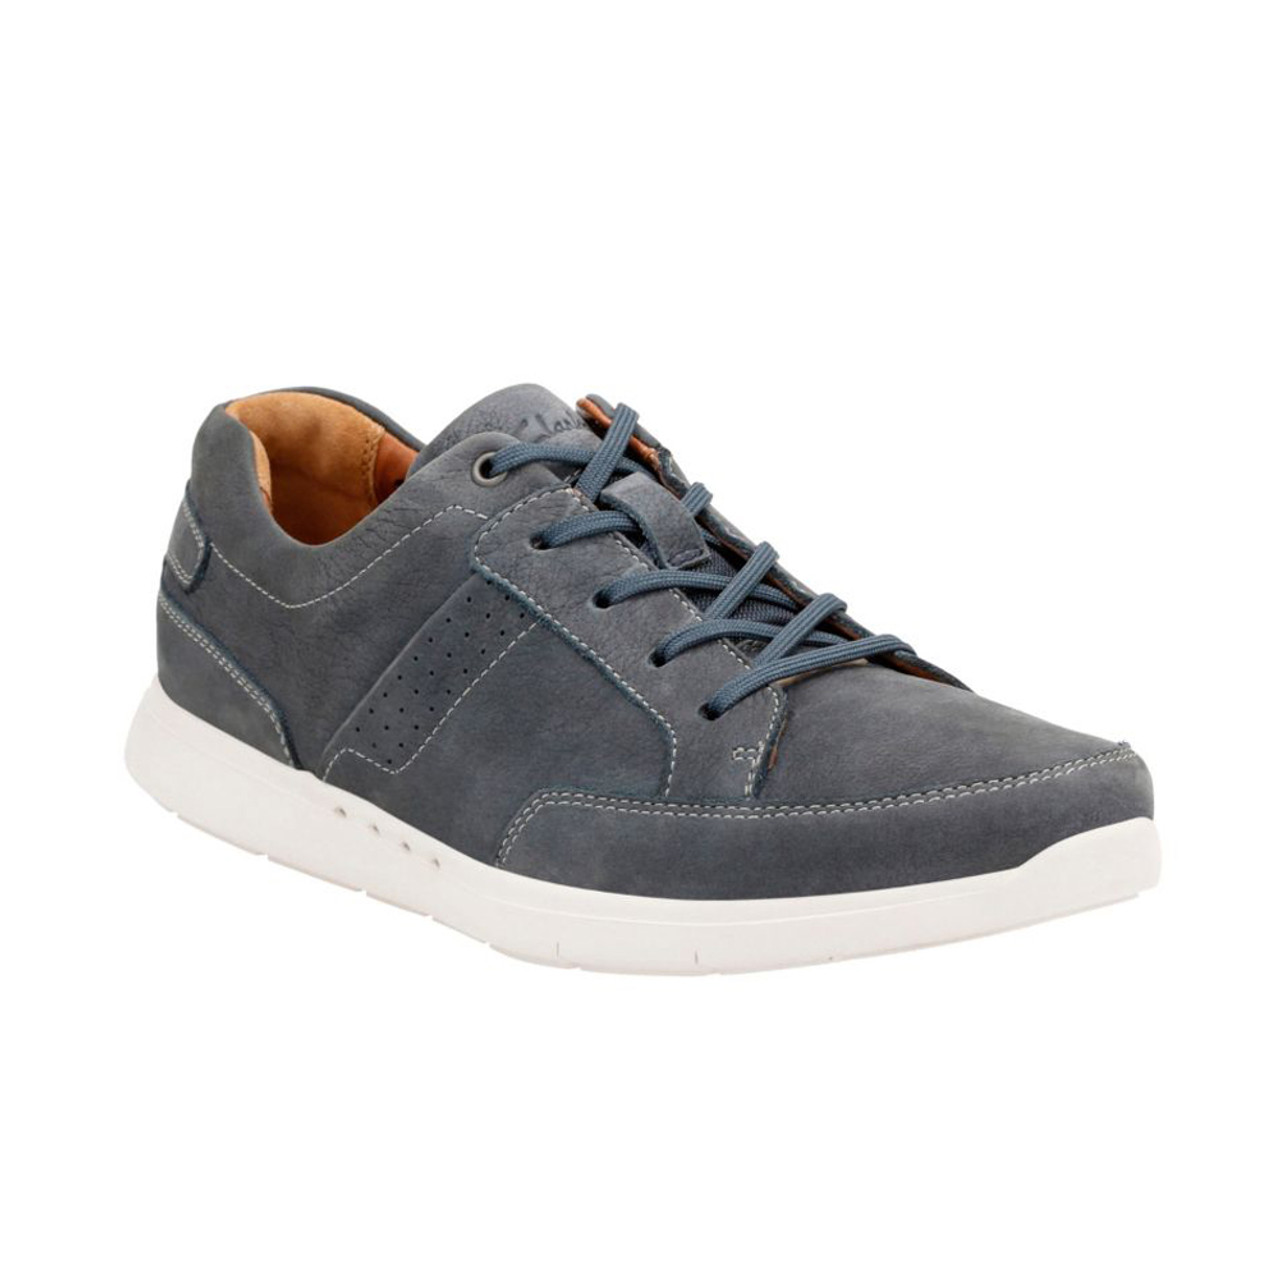 By Clarks Lace Sneaker - Blue | Discount Clarks Men's Casual Shoes & More - Shoolu.com | Shoolu.com